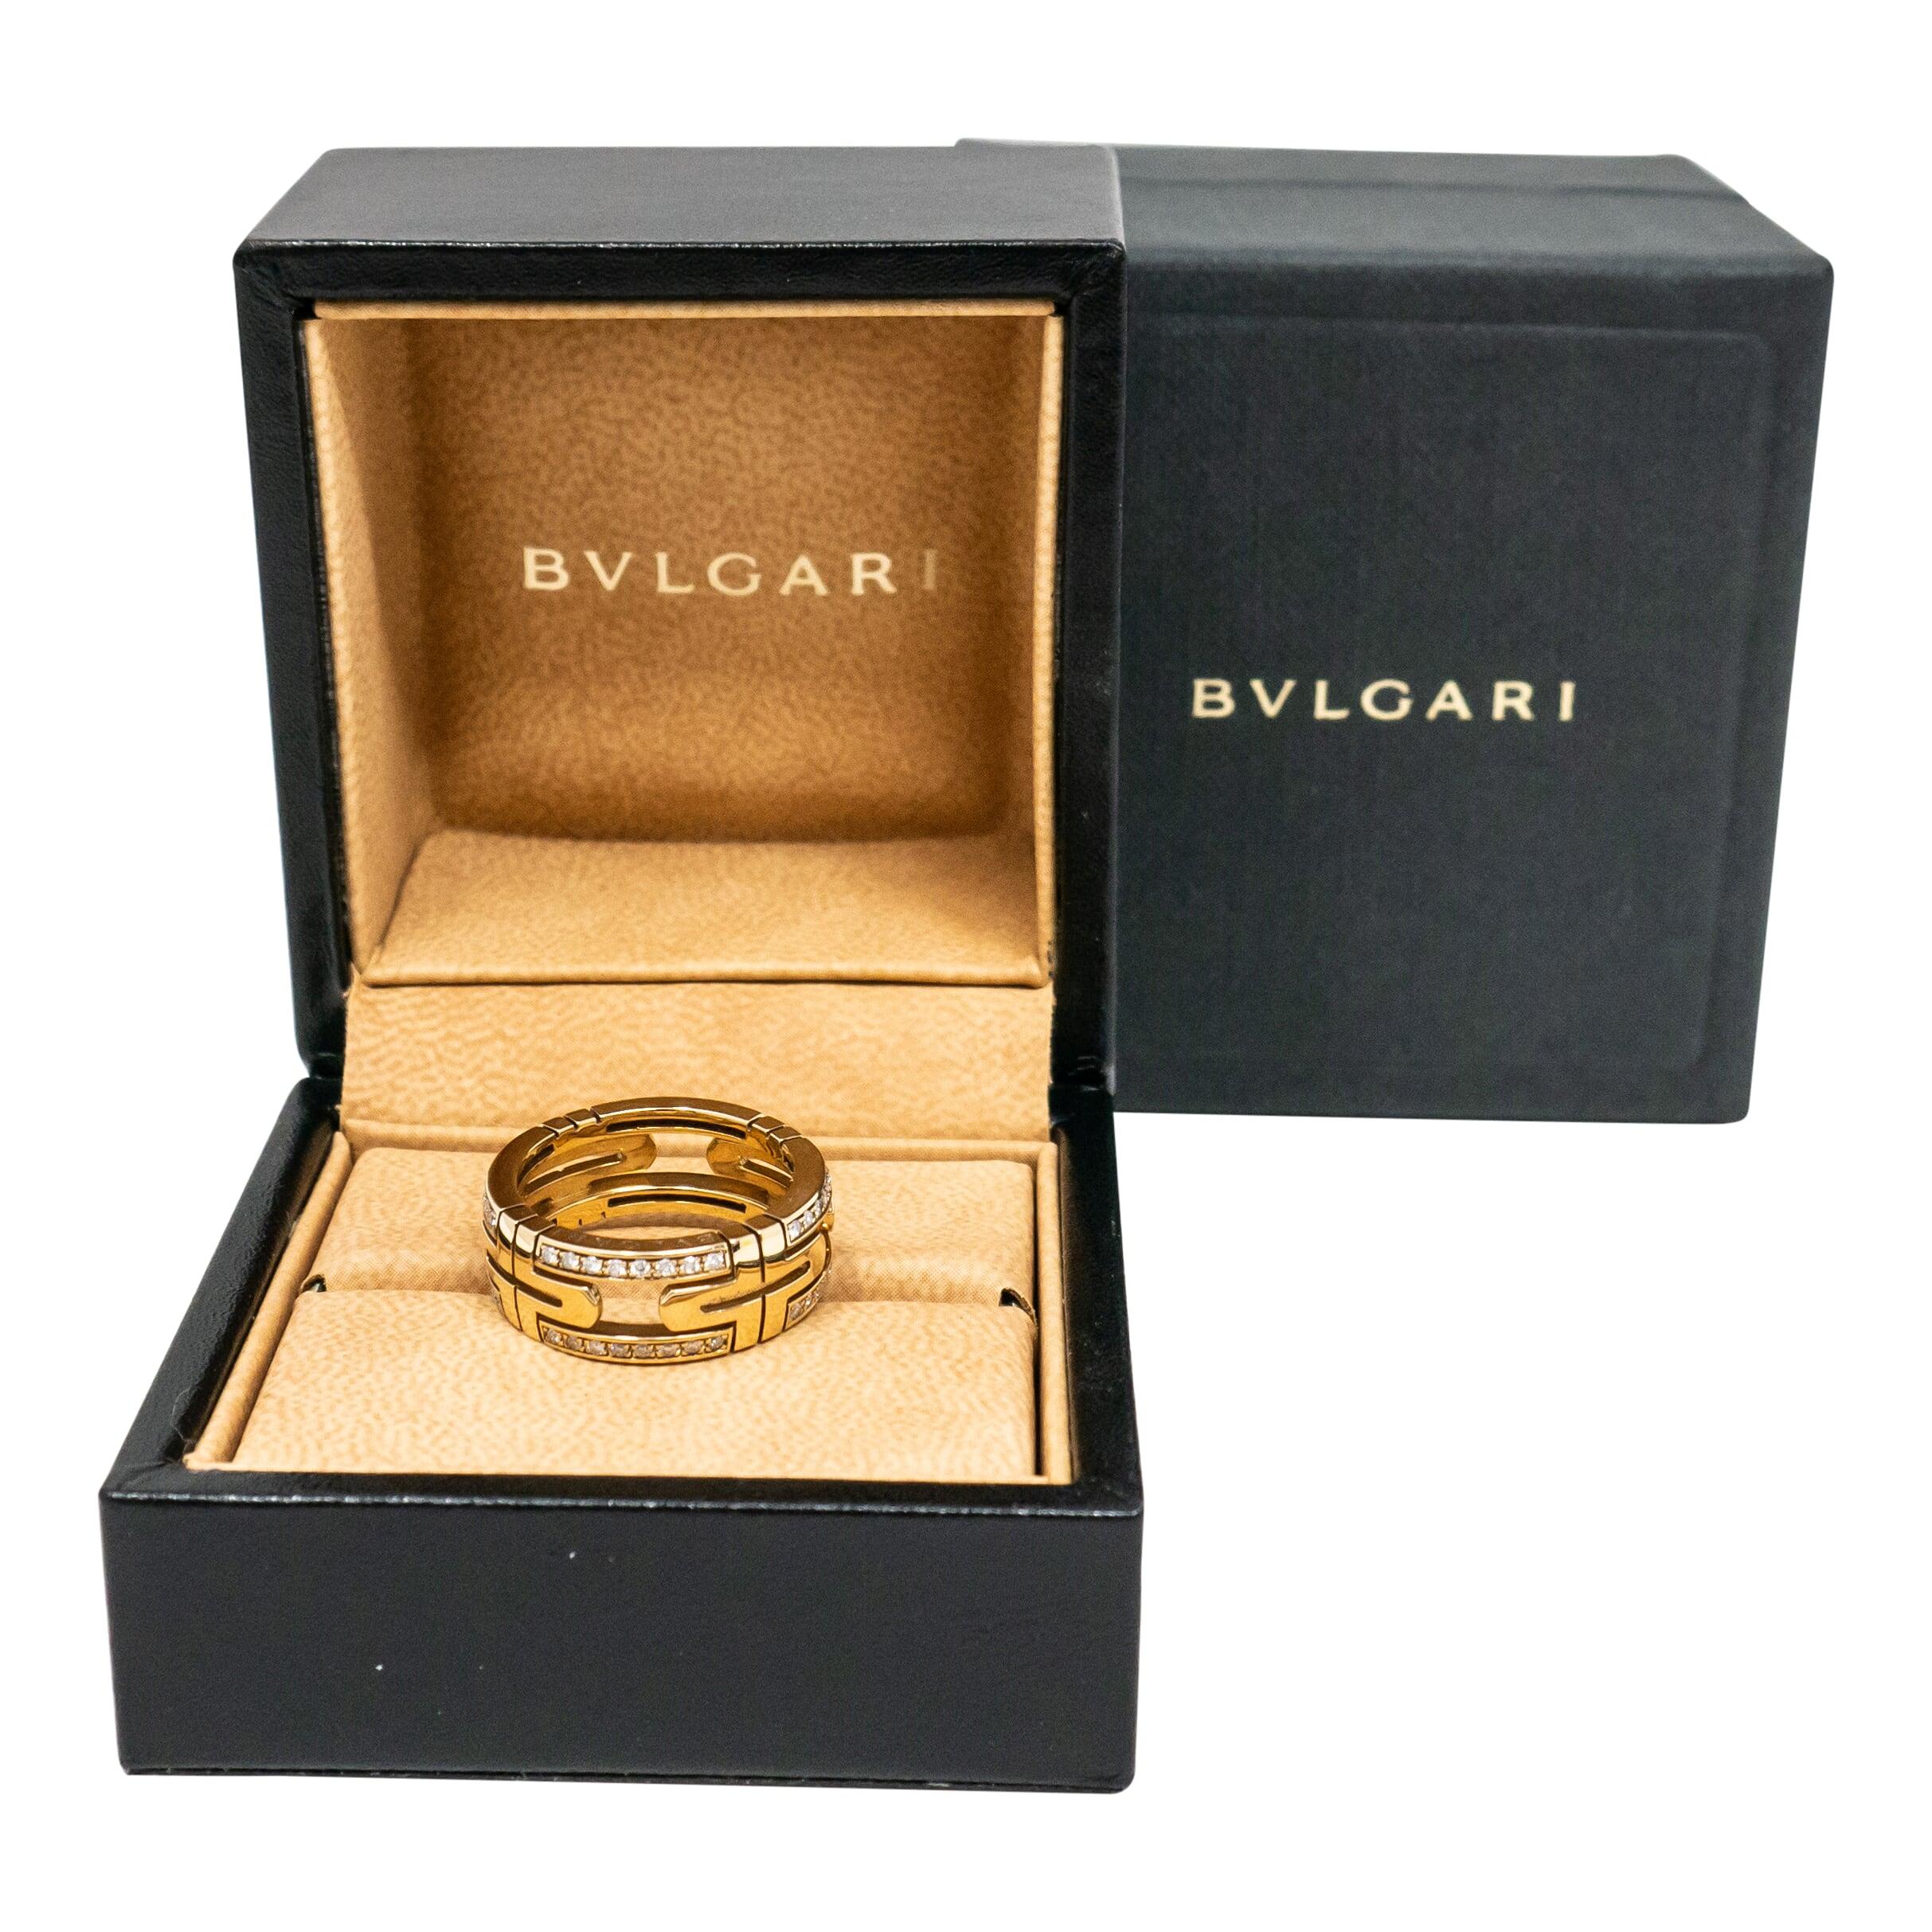 BVLGARI Yellow Gold Demi Pavé Diamonds Ring Size 7.5; 7 total grams in 18k gold; 0.4total grams in diamonds
